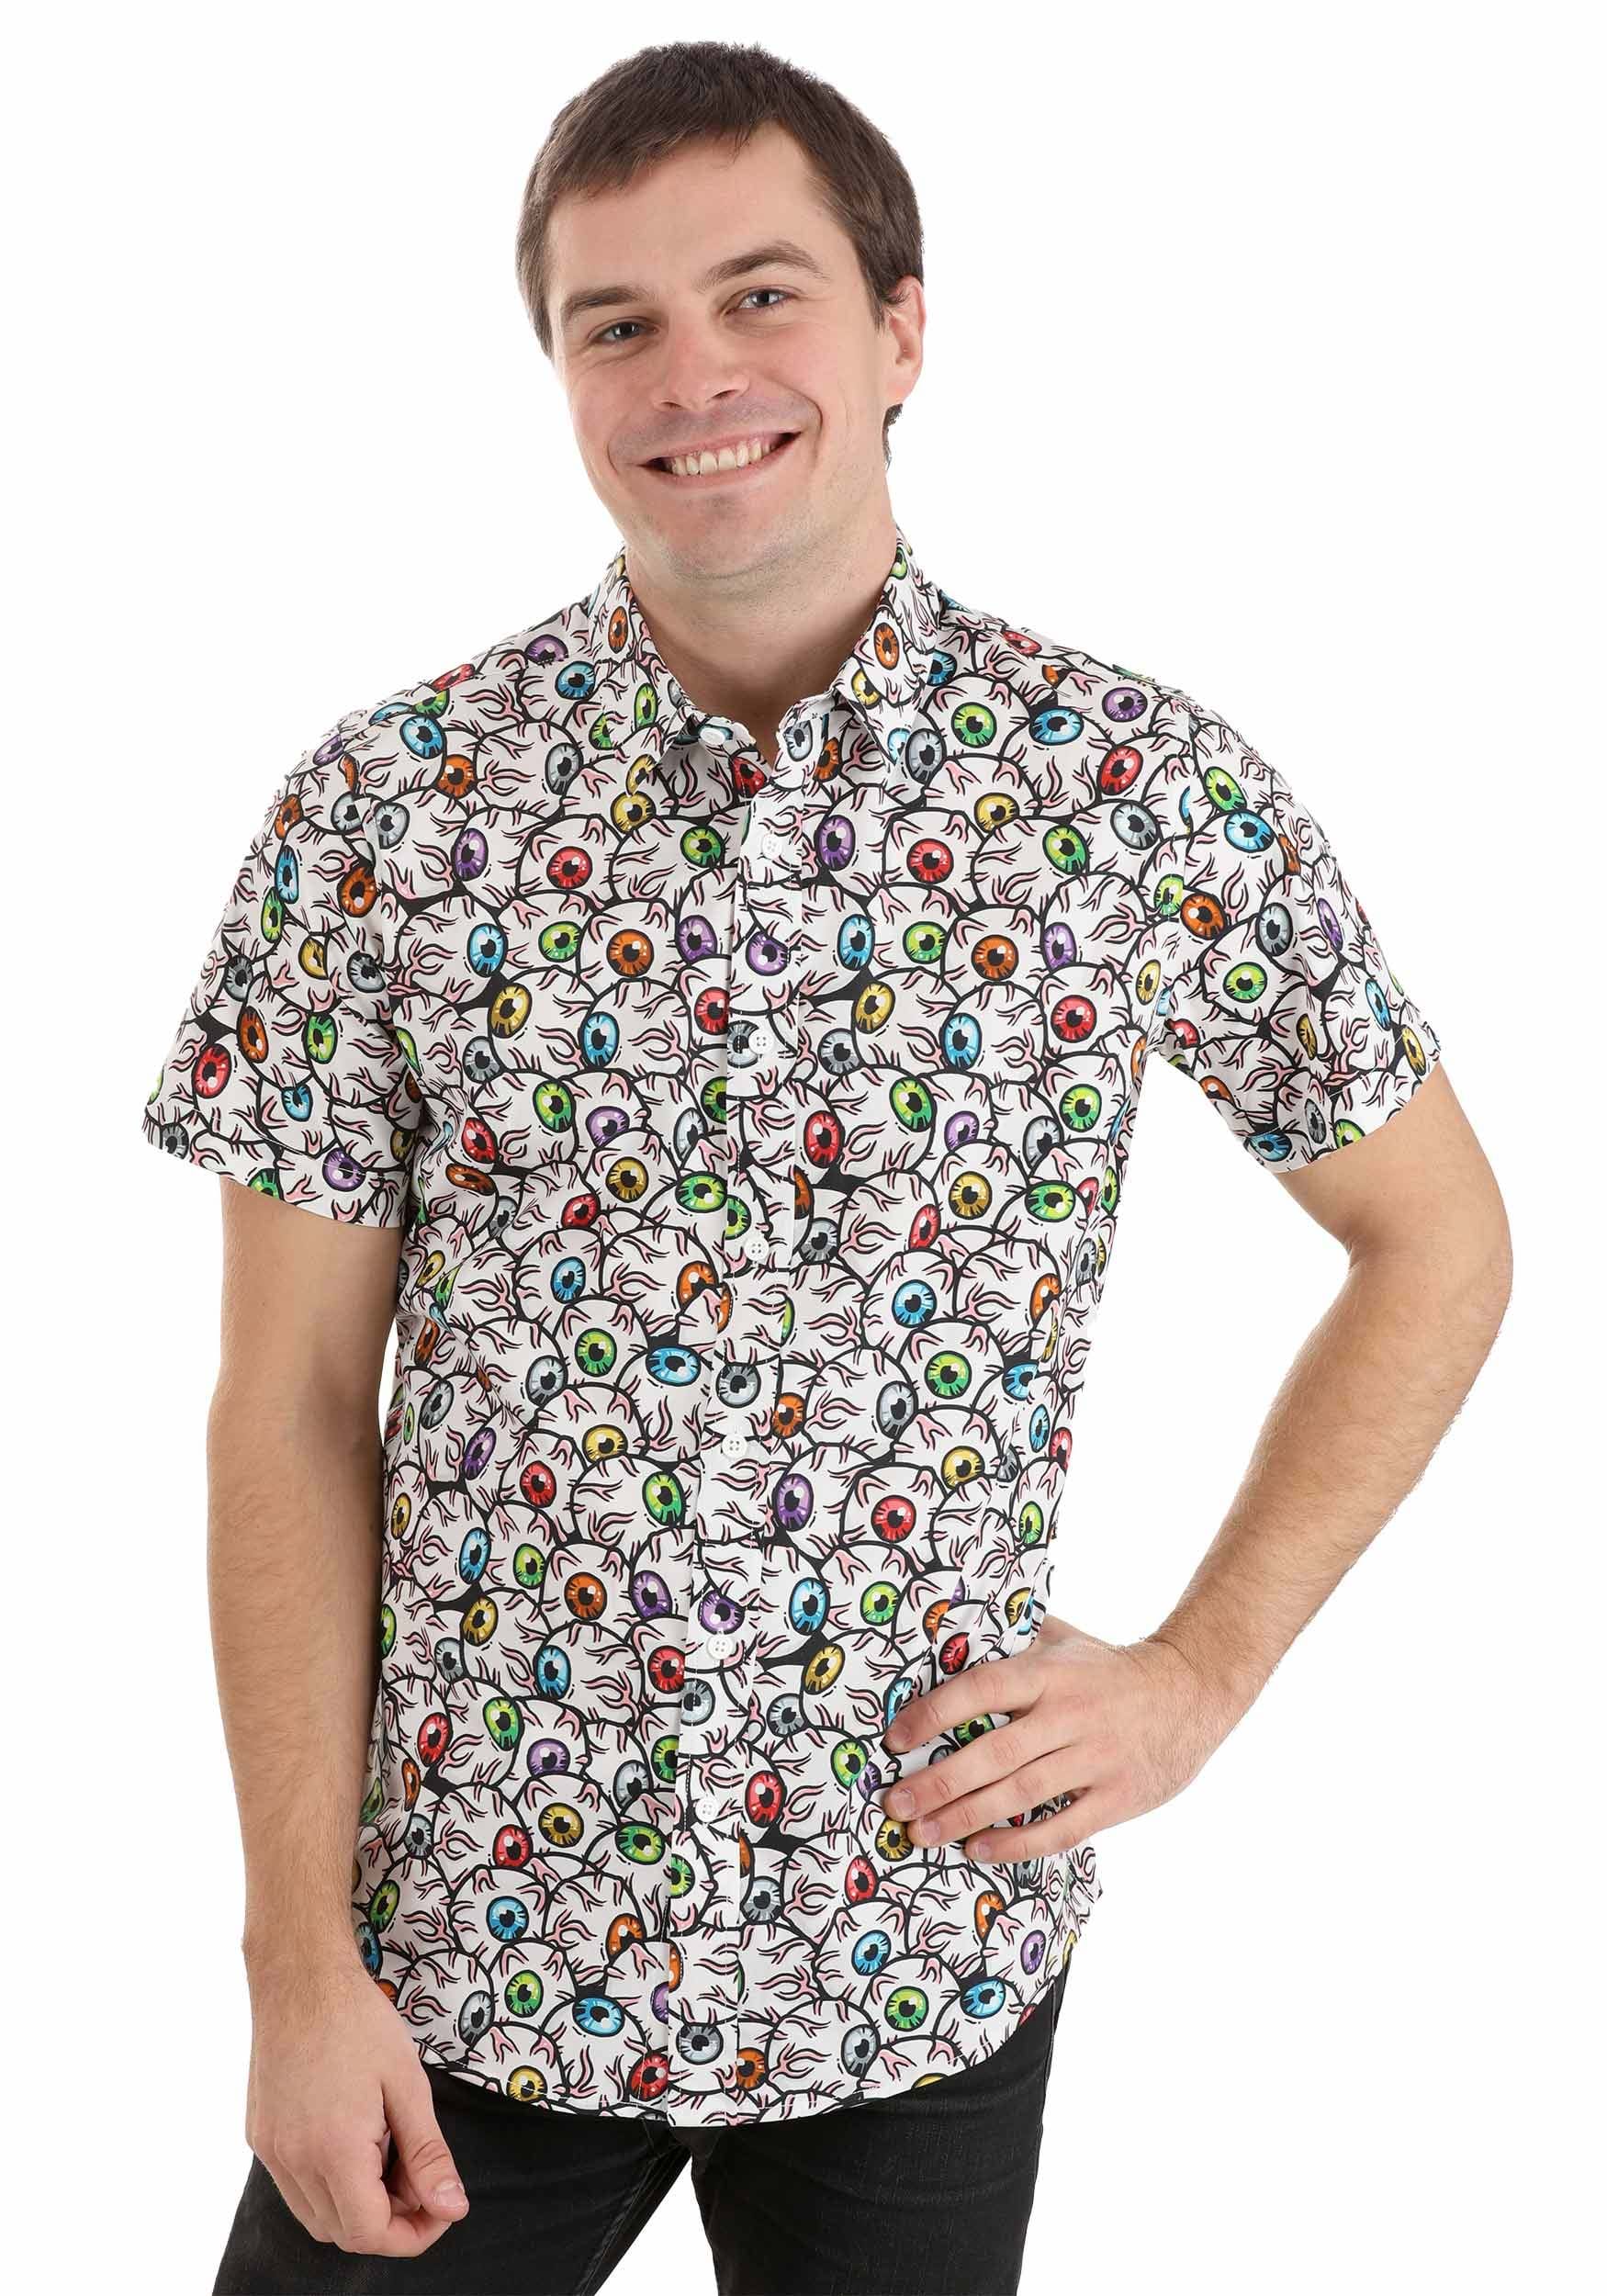 All The Eyeballs Button-Up Shirt For Adults , Halloween Shirts